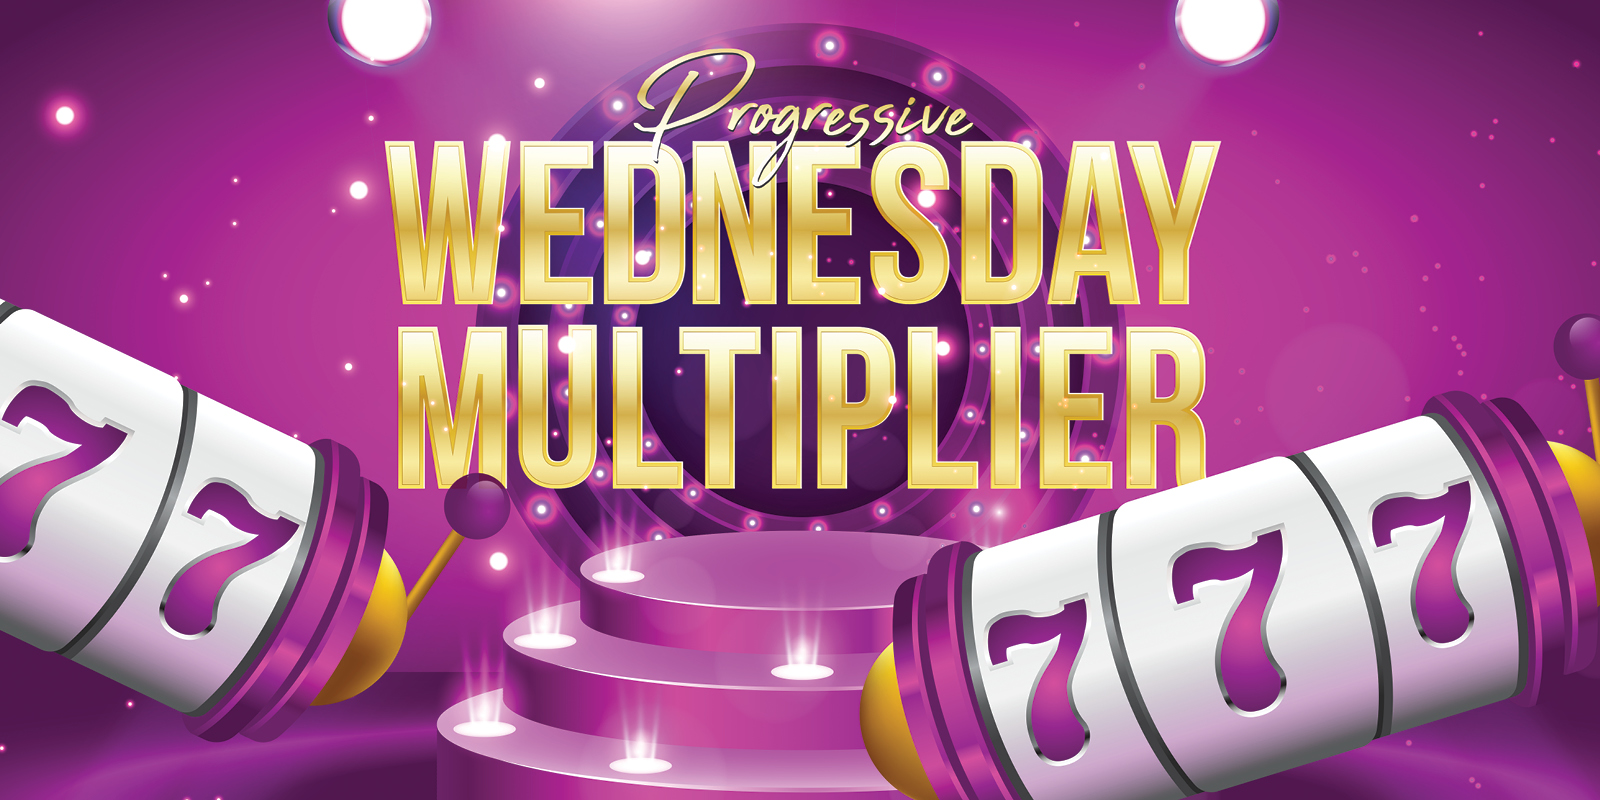 Progressive Wednesday Multiplier copy against purple background